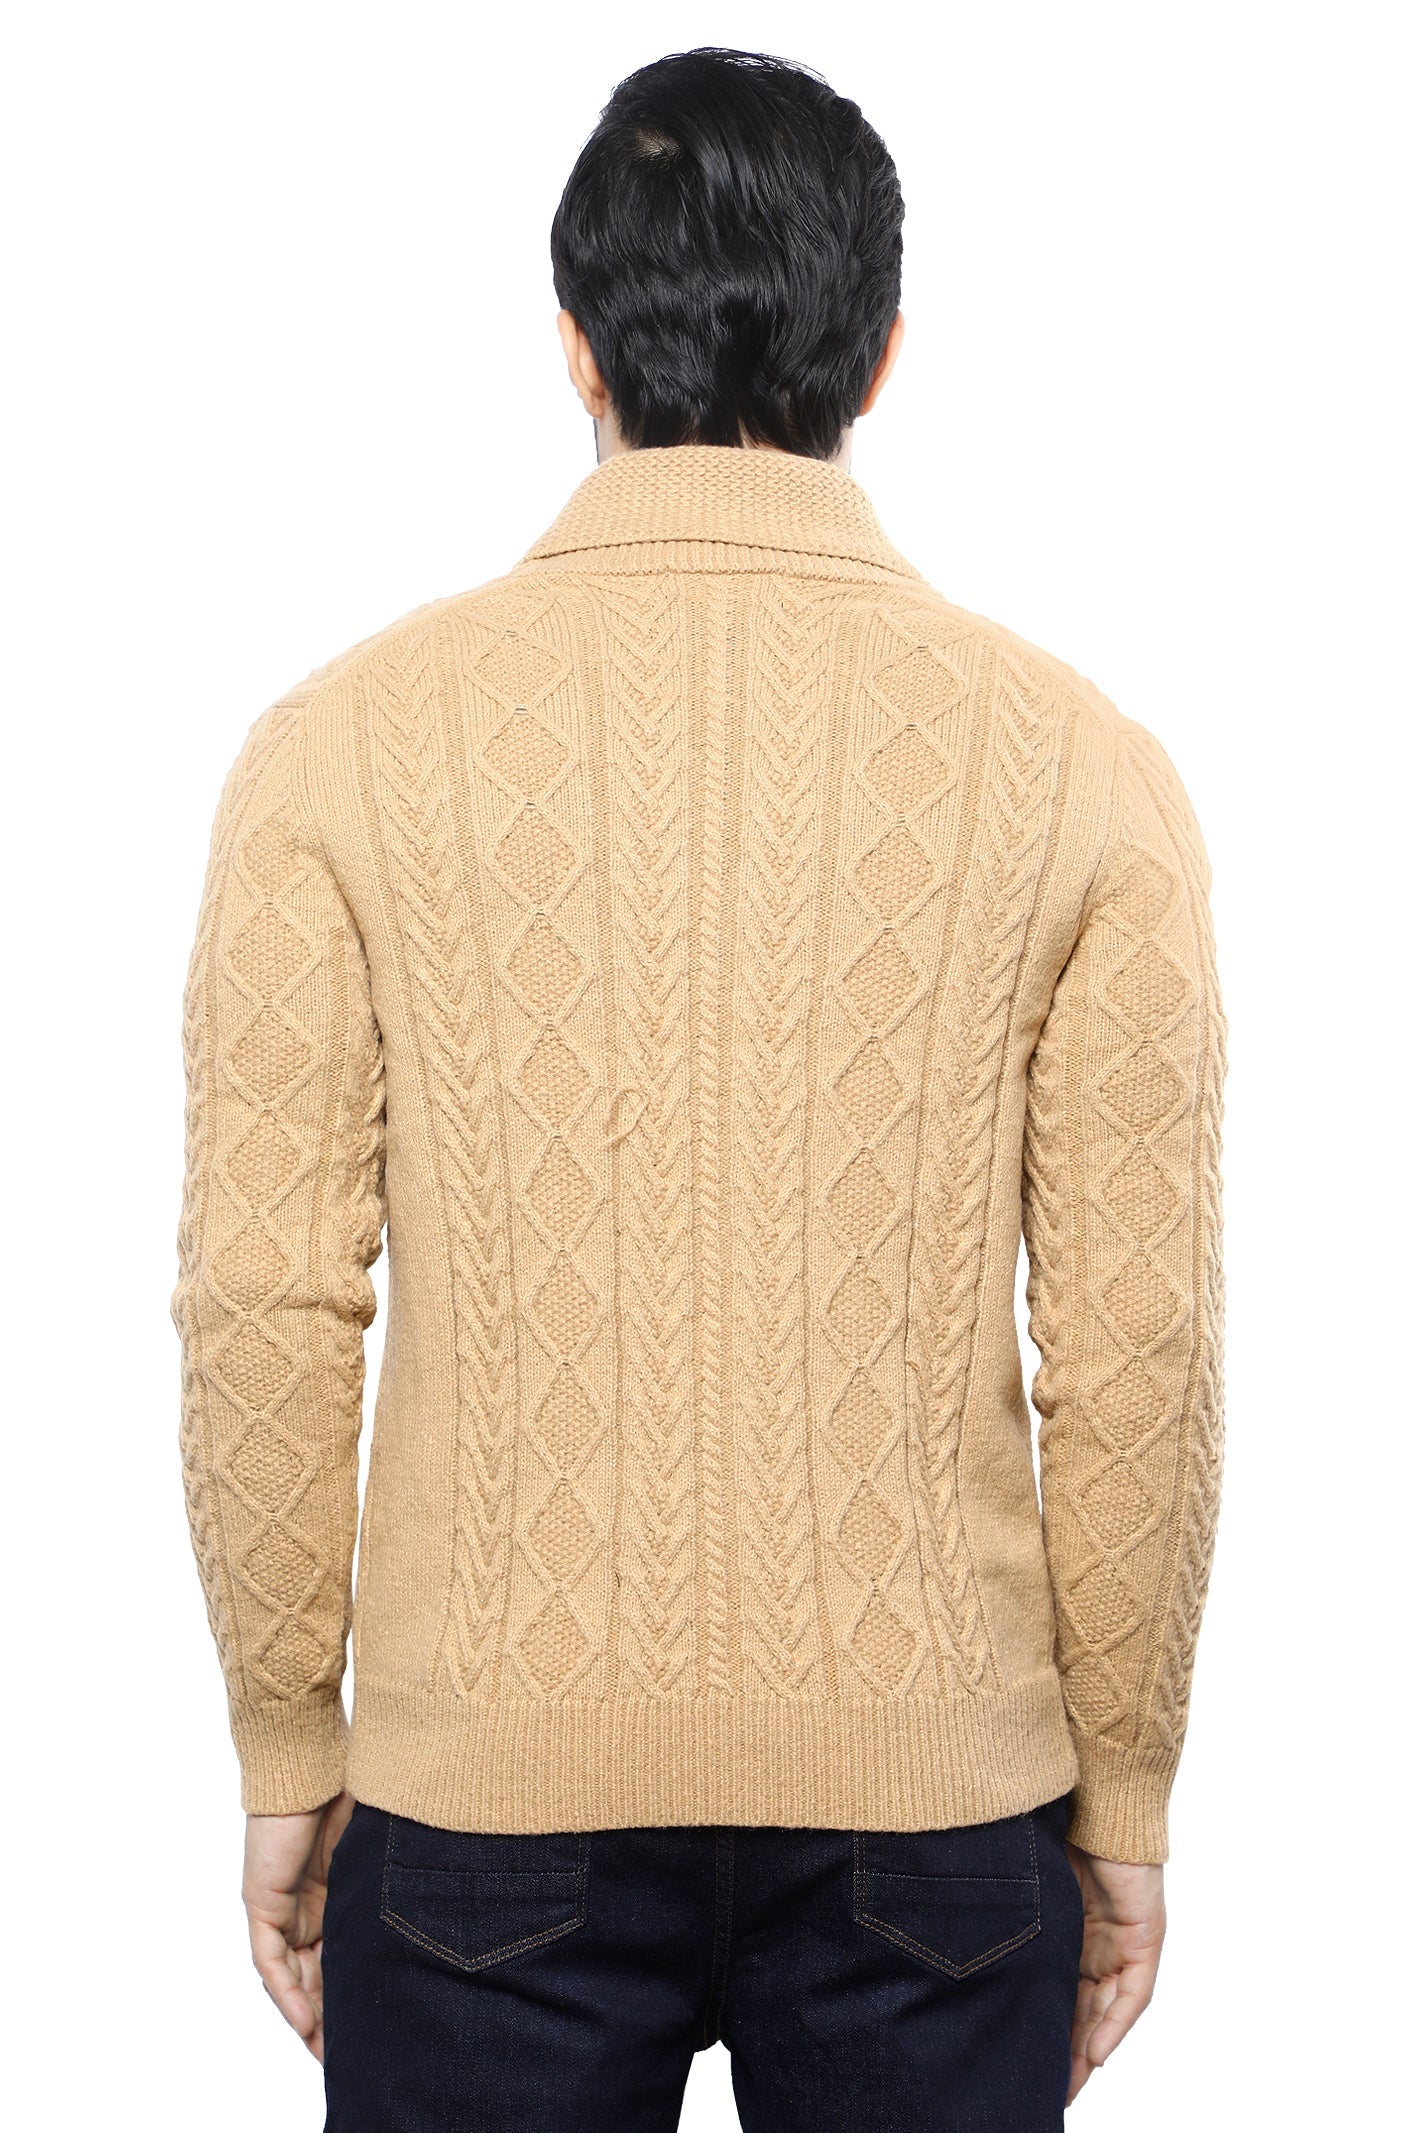 Gents Sweater SKU: SA596-FAWN